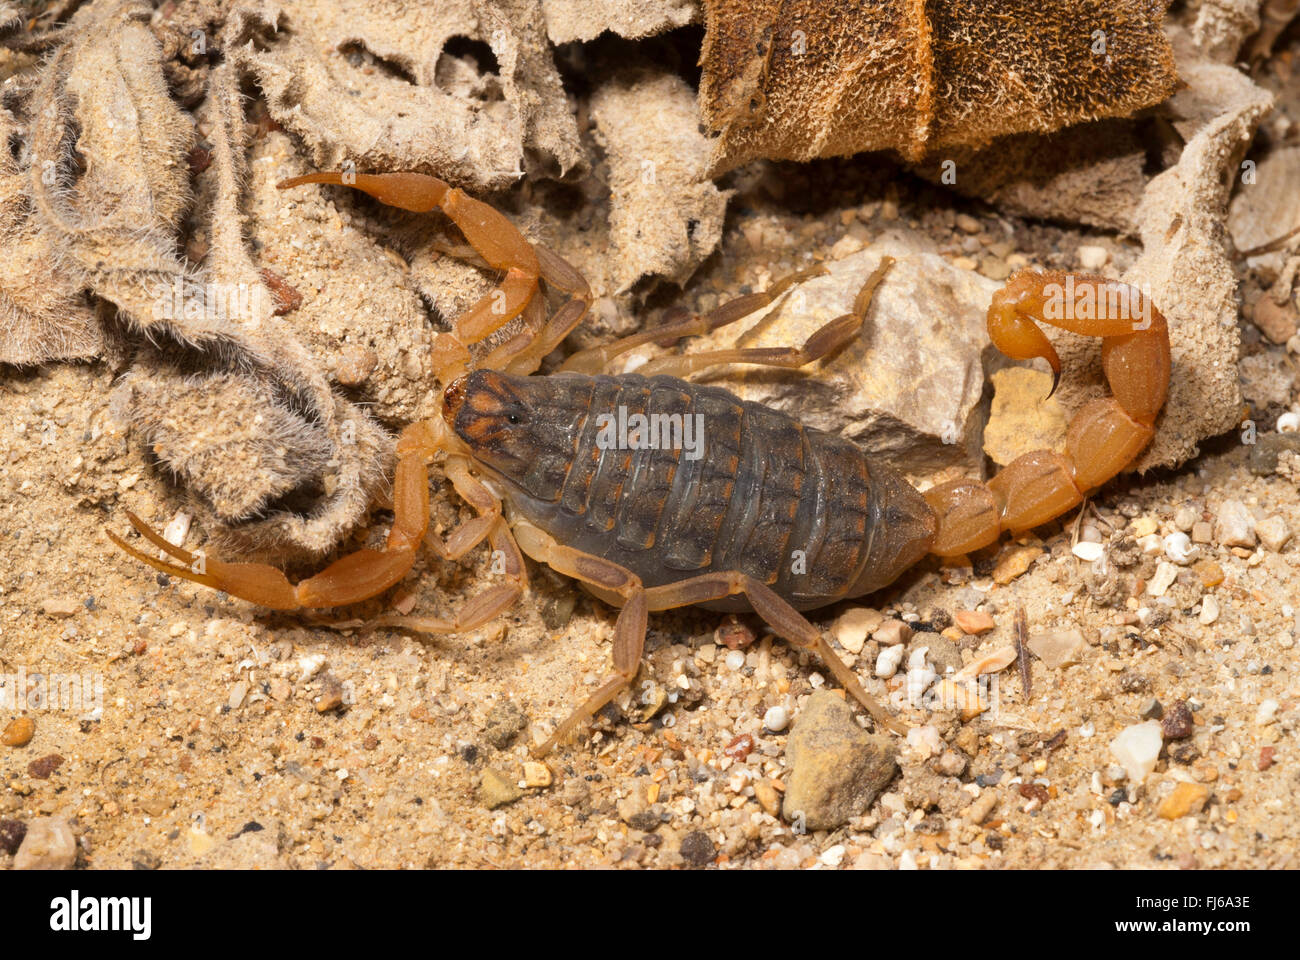 Mediterranean checkered scorpion (Mesobuthus gibbosus), on sandy ground, Greece, Peloponnese Stock Photo